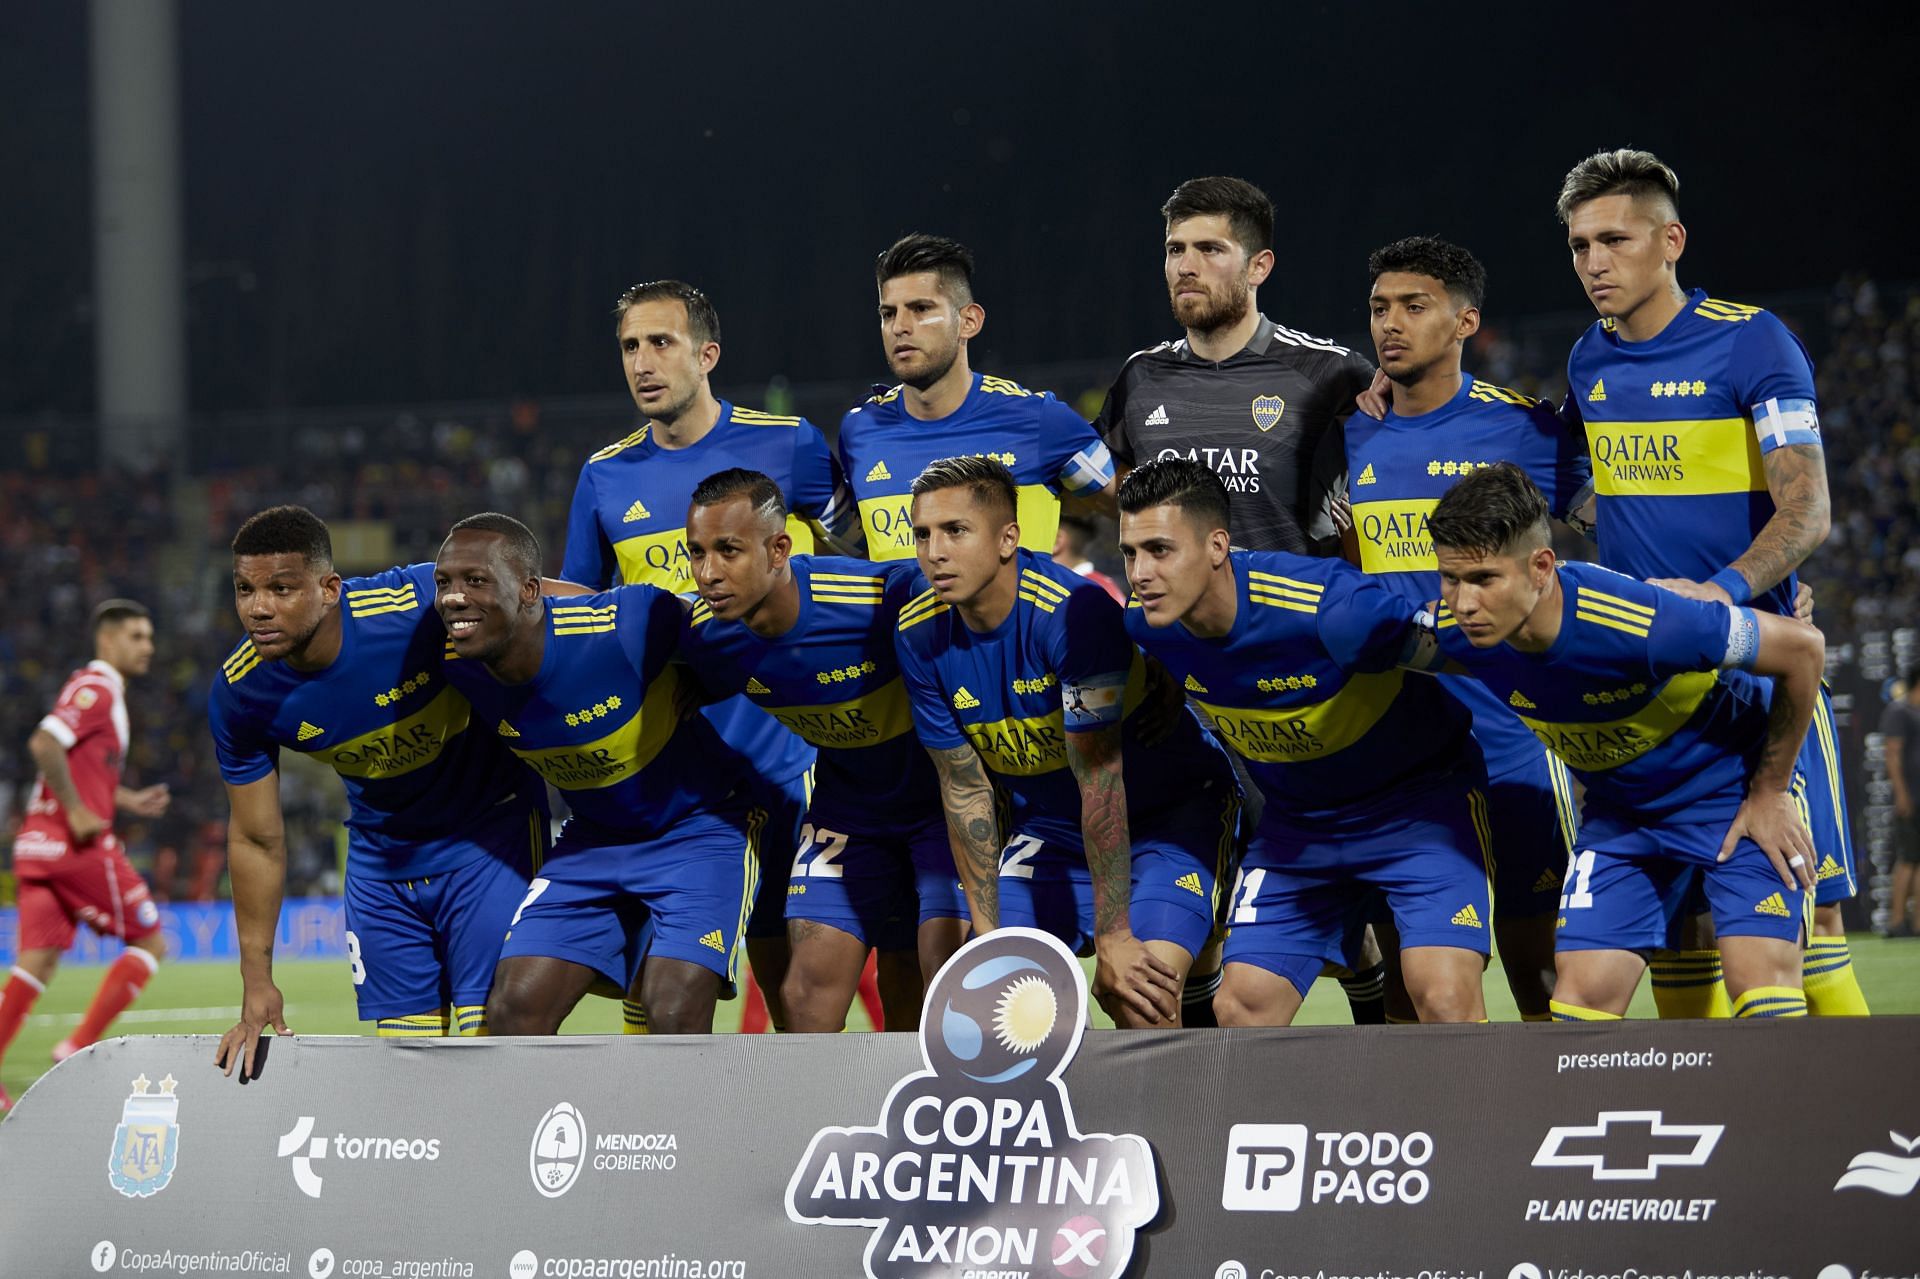 Boca Juniors will face Aldosivi on Monday